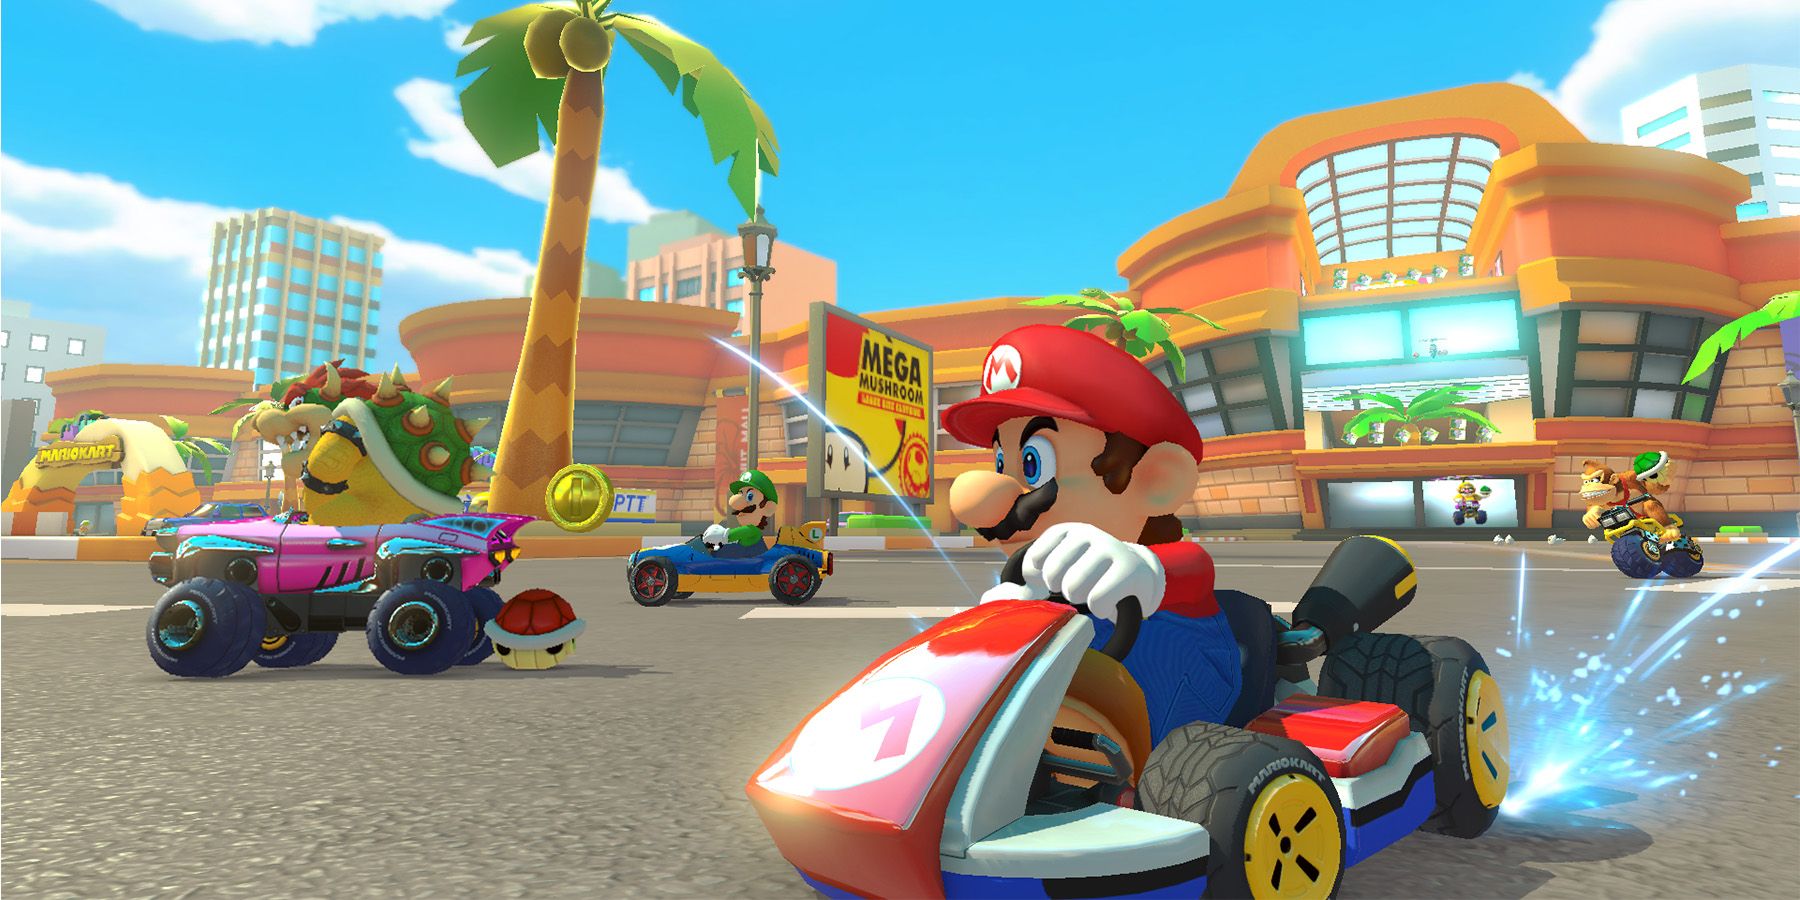 Mario in Kart drifting next to Bowser and Luigi on Mario Kart course